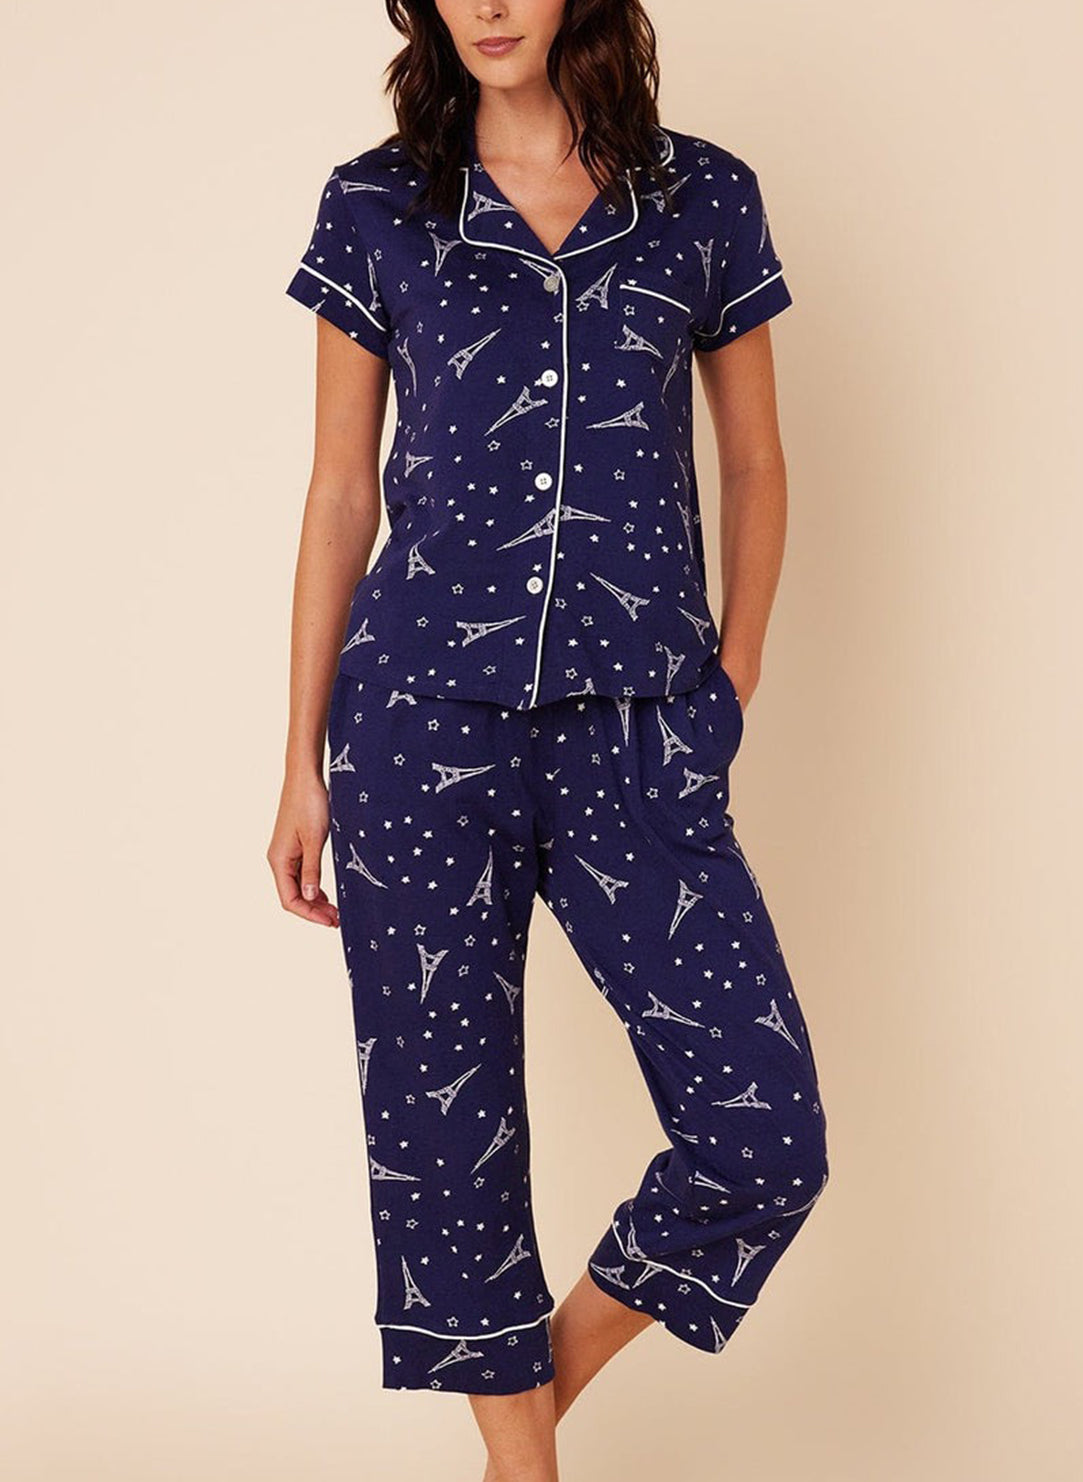 Etoile Short Sleeve Capri Pajama Set